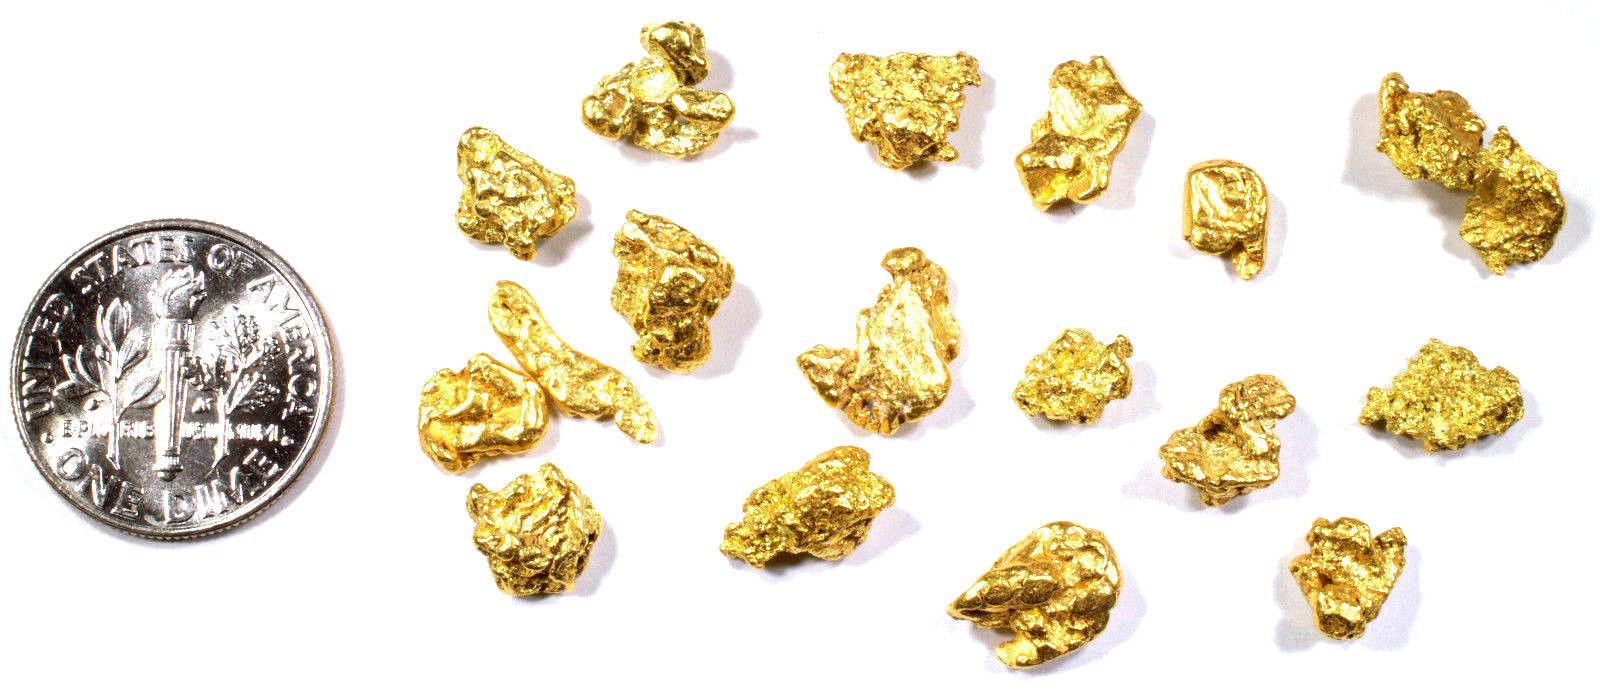 10.000 GRAMS ALASKAN YUKON BC NATURAL PURE GOLD NUGGETS #4 MESH - Liquidbullion